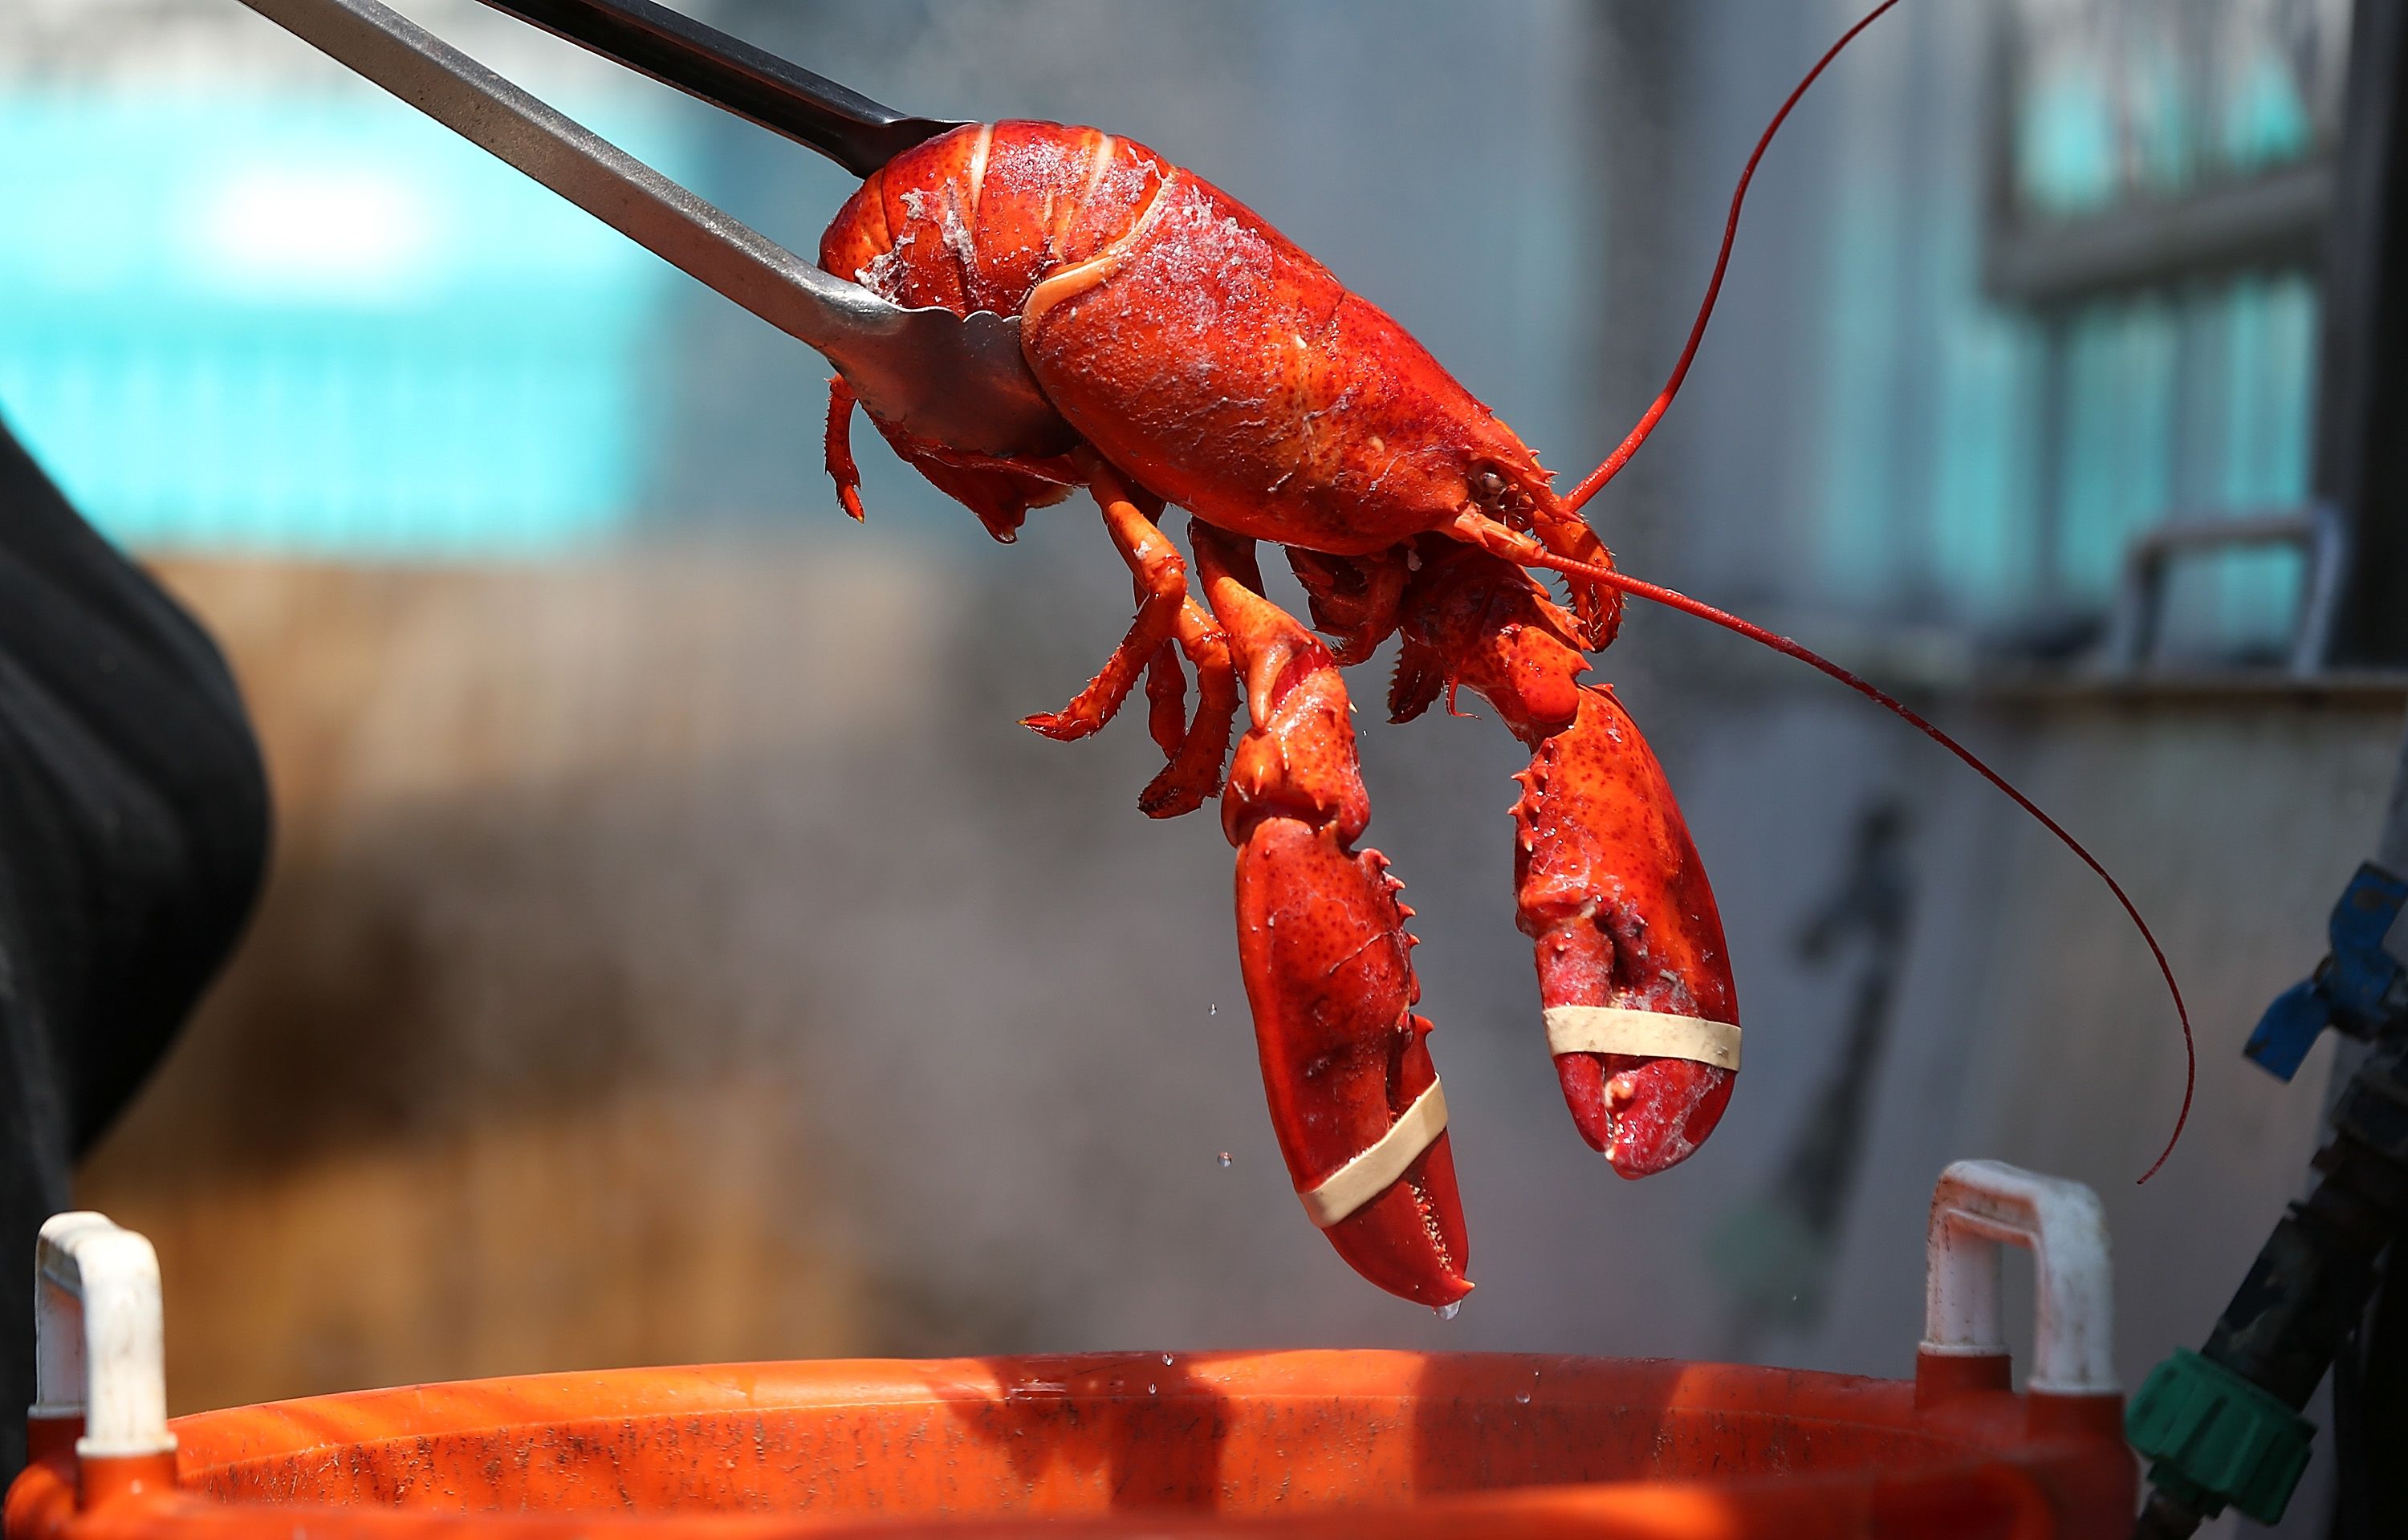 Switzerland bans boiling lobsters alive